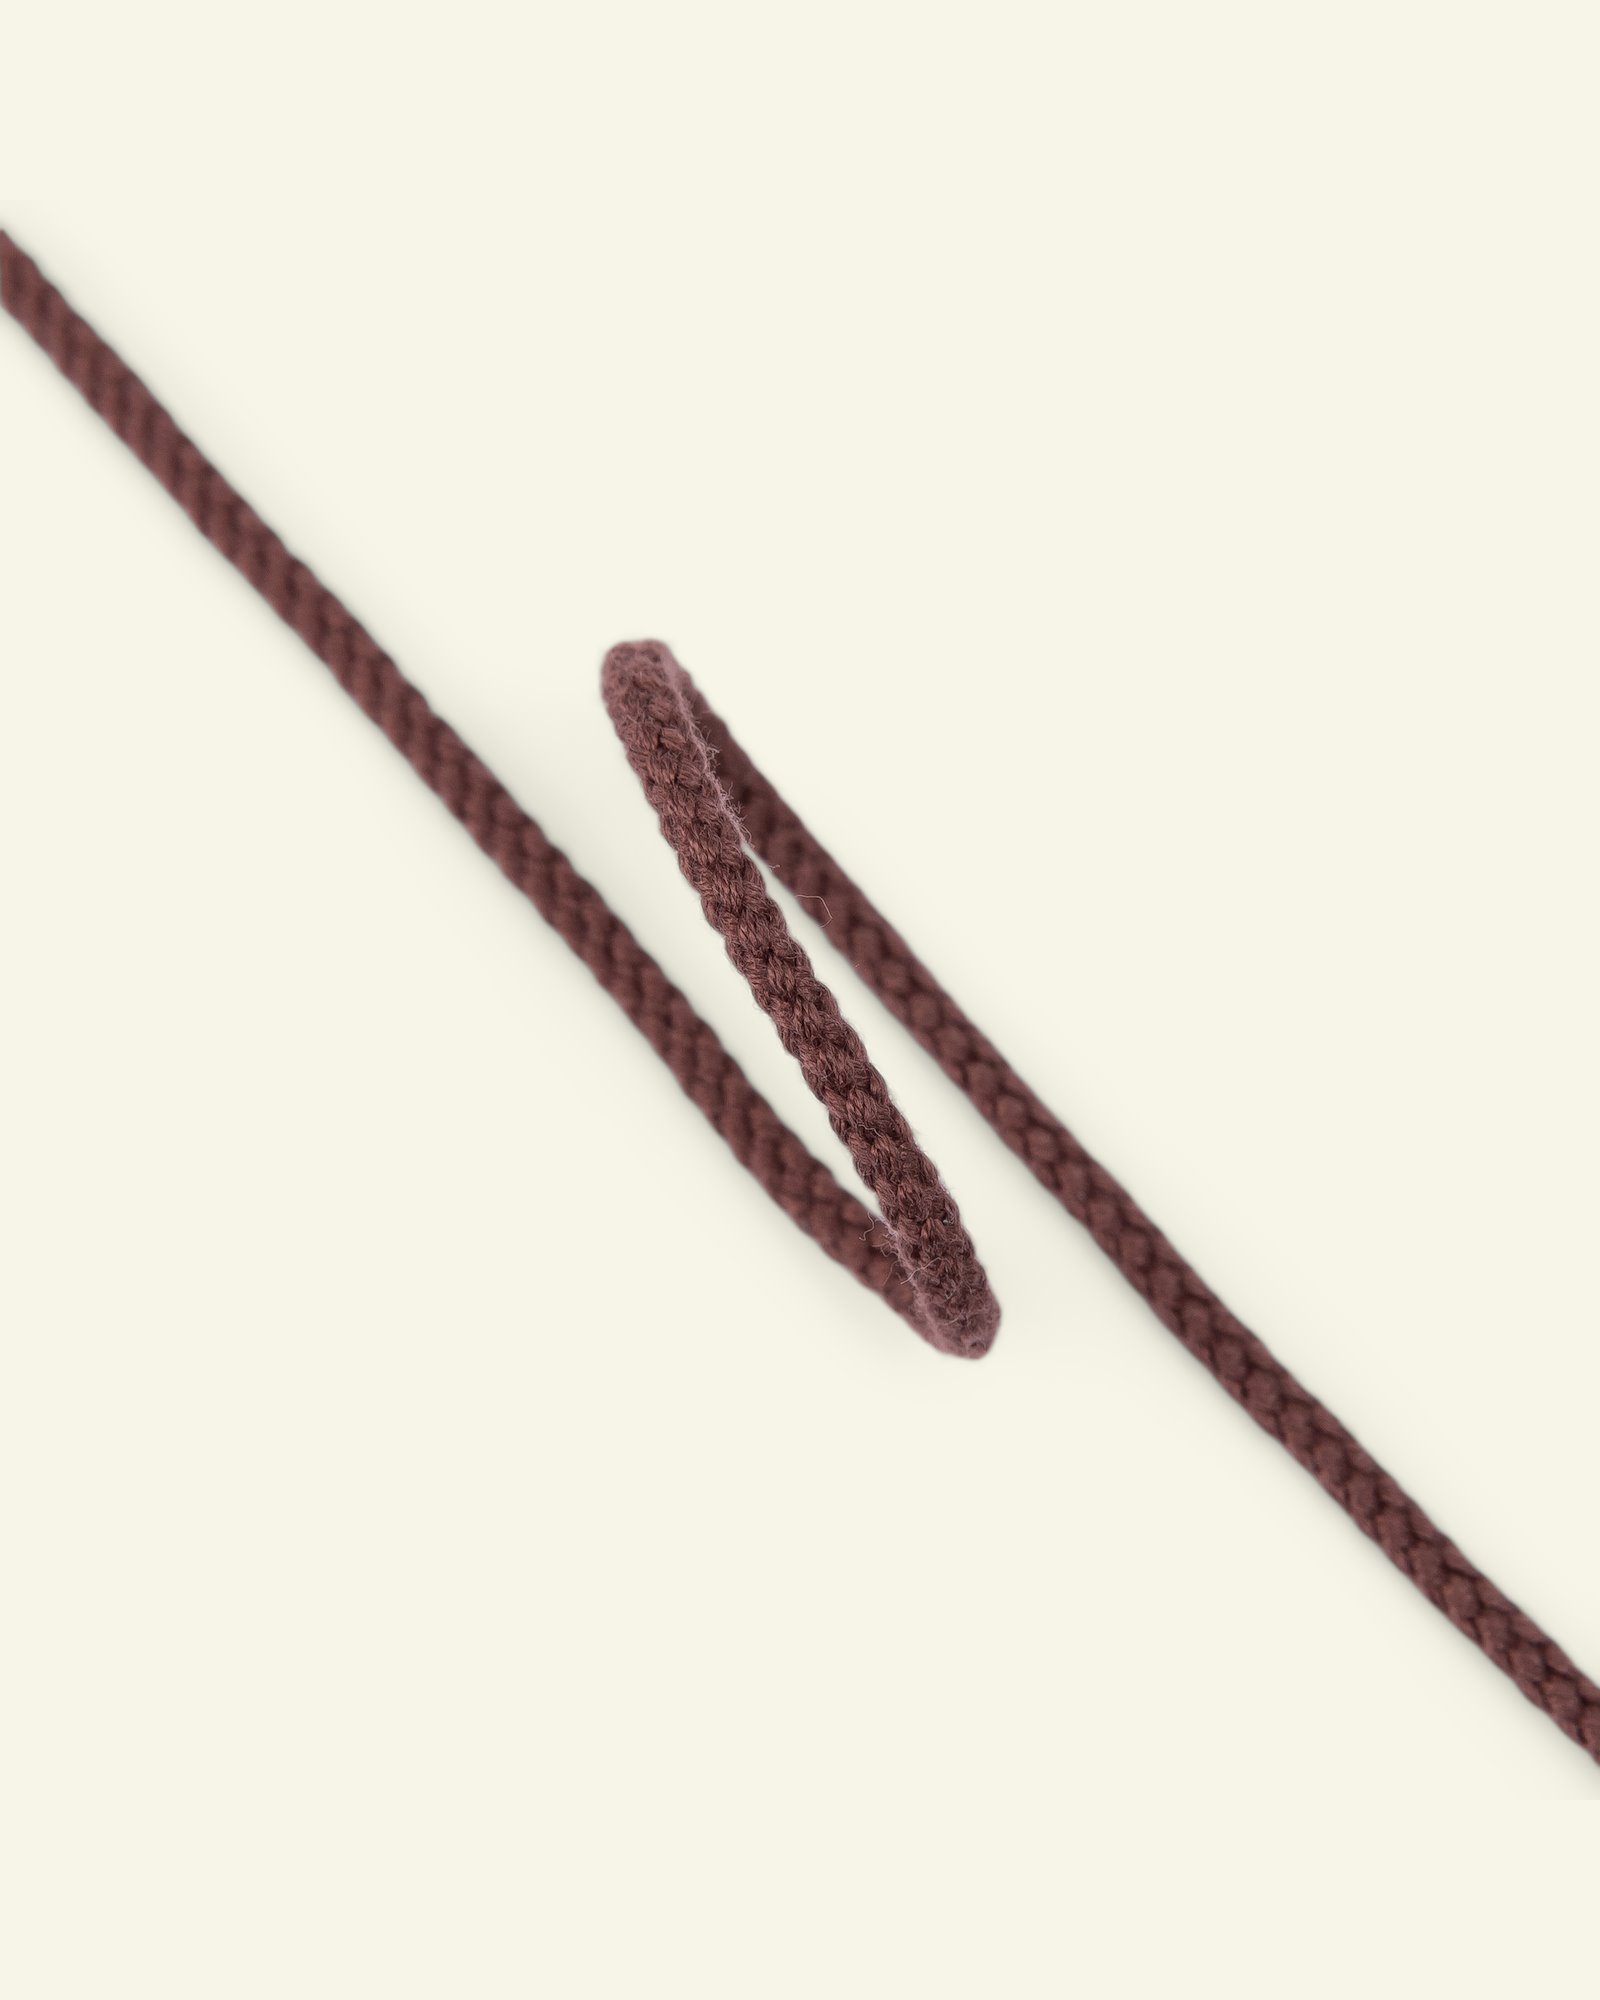 Anorak cord 3.5mm chestnut 5m 75034_pack